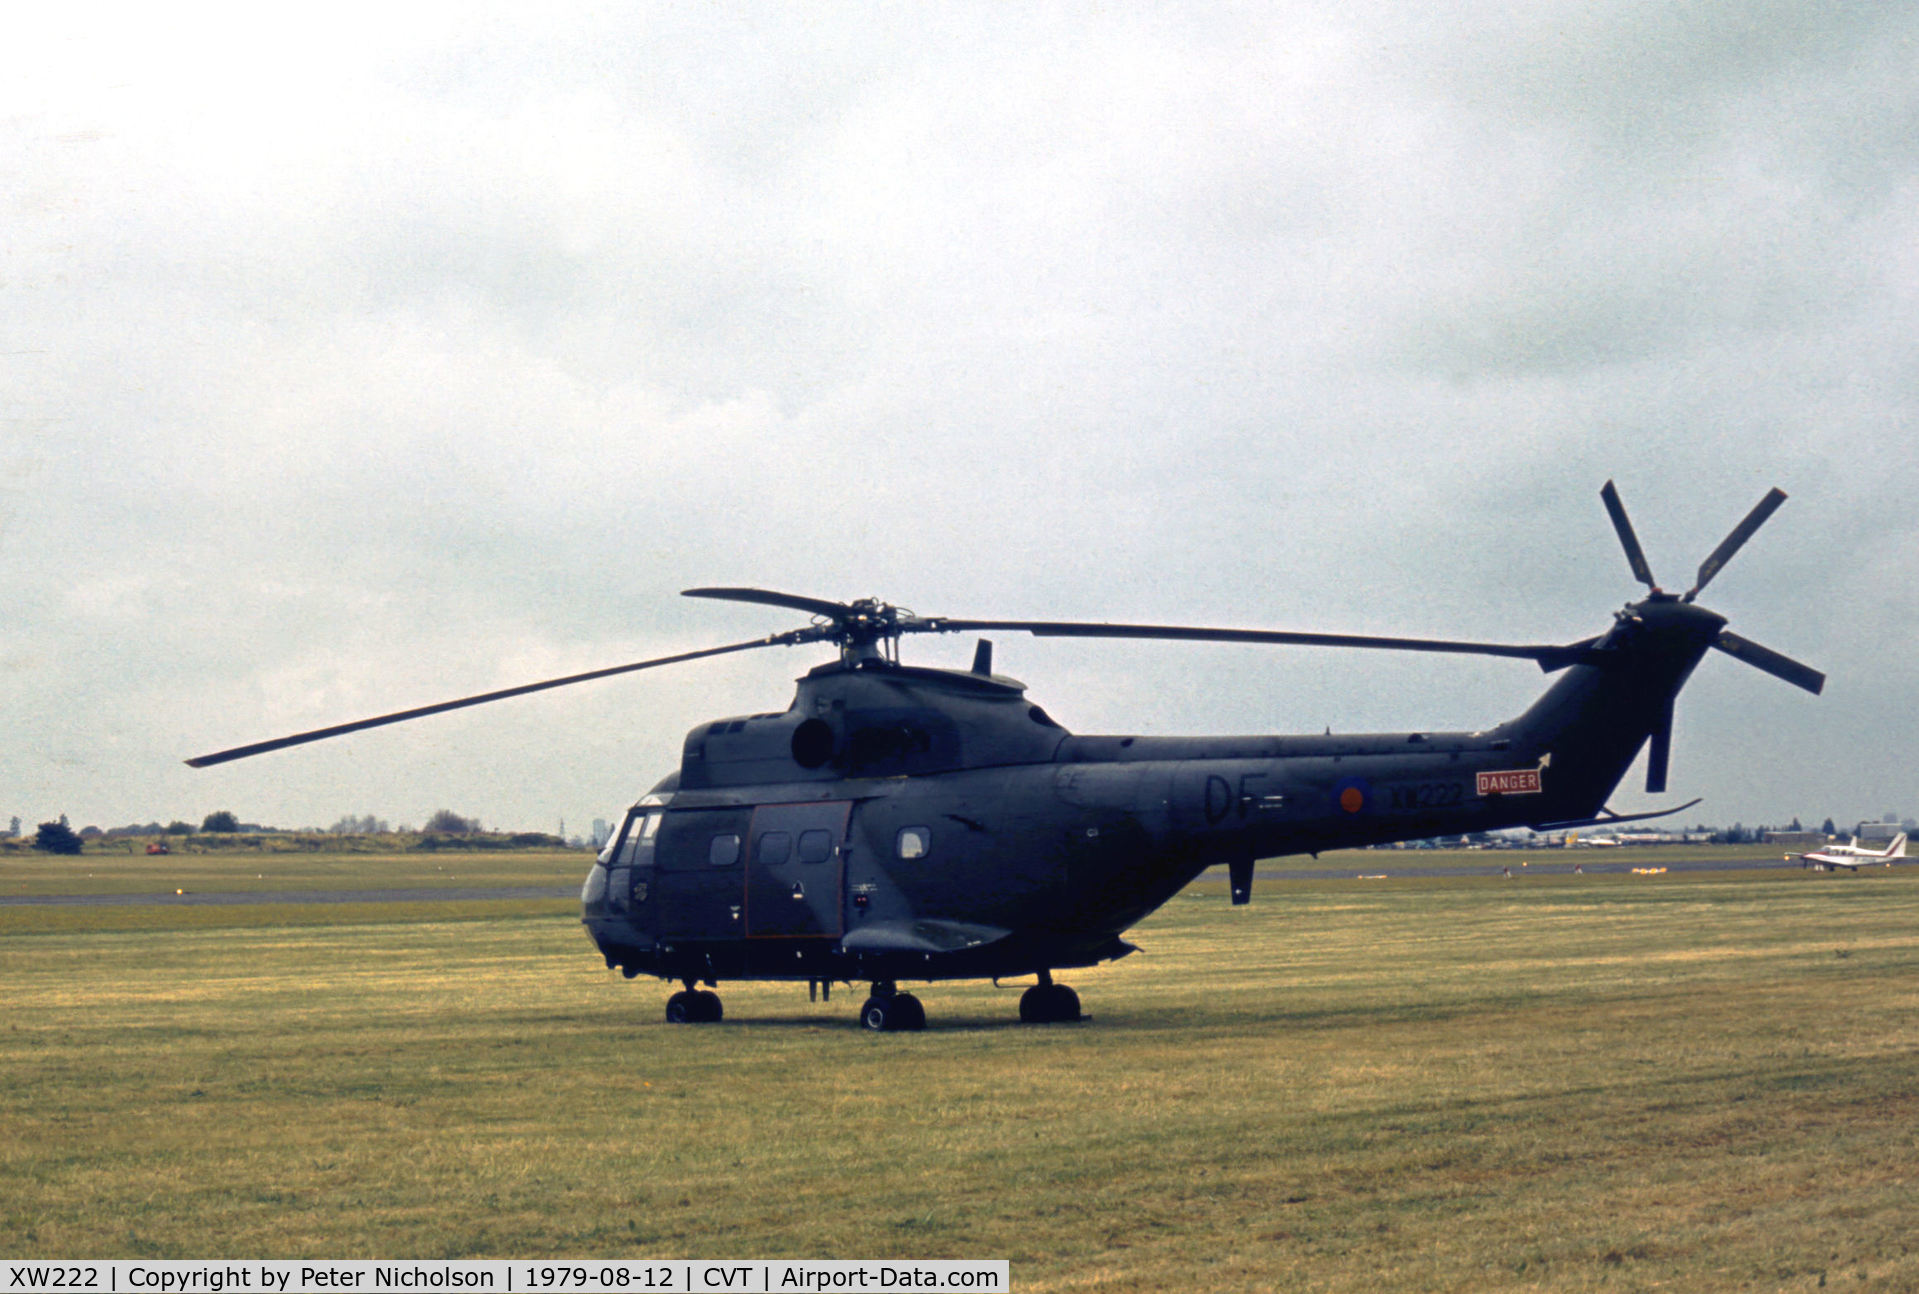 XW222, 1972 Westland Puma HC.1 C/N 1157, Puma HC.1, callsign DLA 91, of 230 Squadron at RAF Aldergrove on display at the 1979 Coventry Airshow.